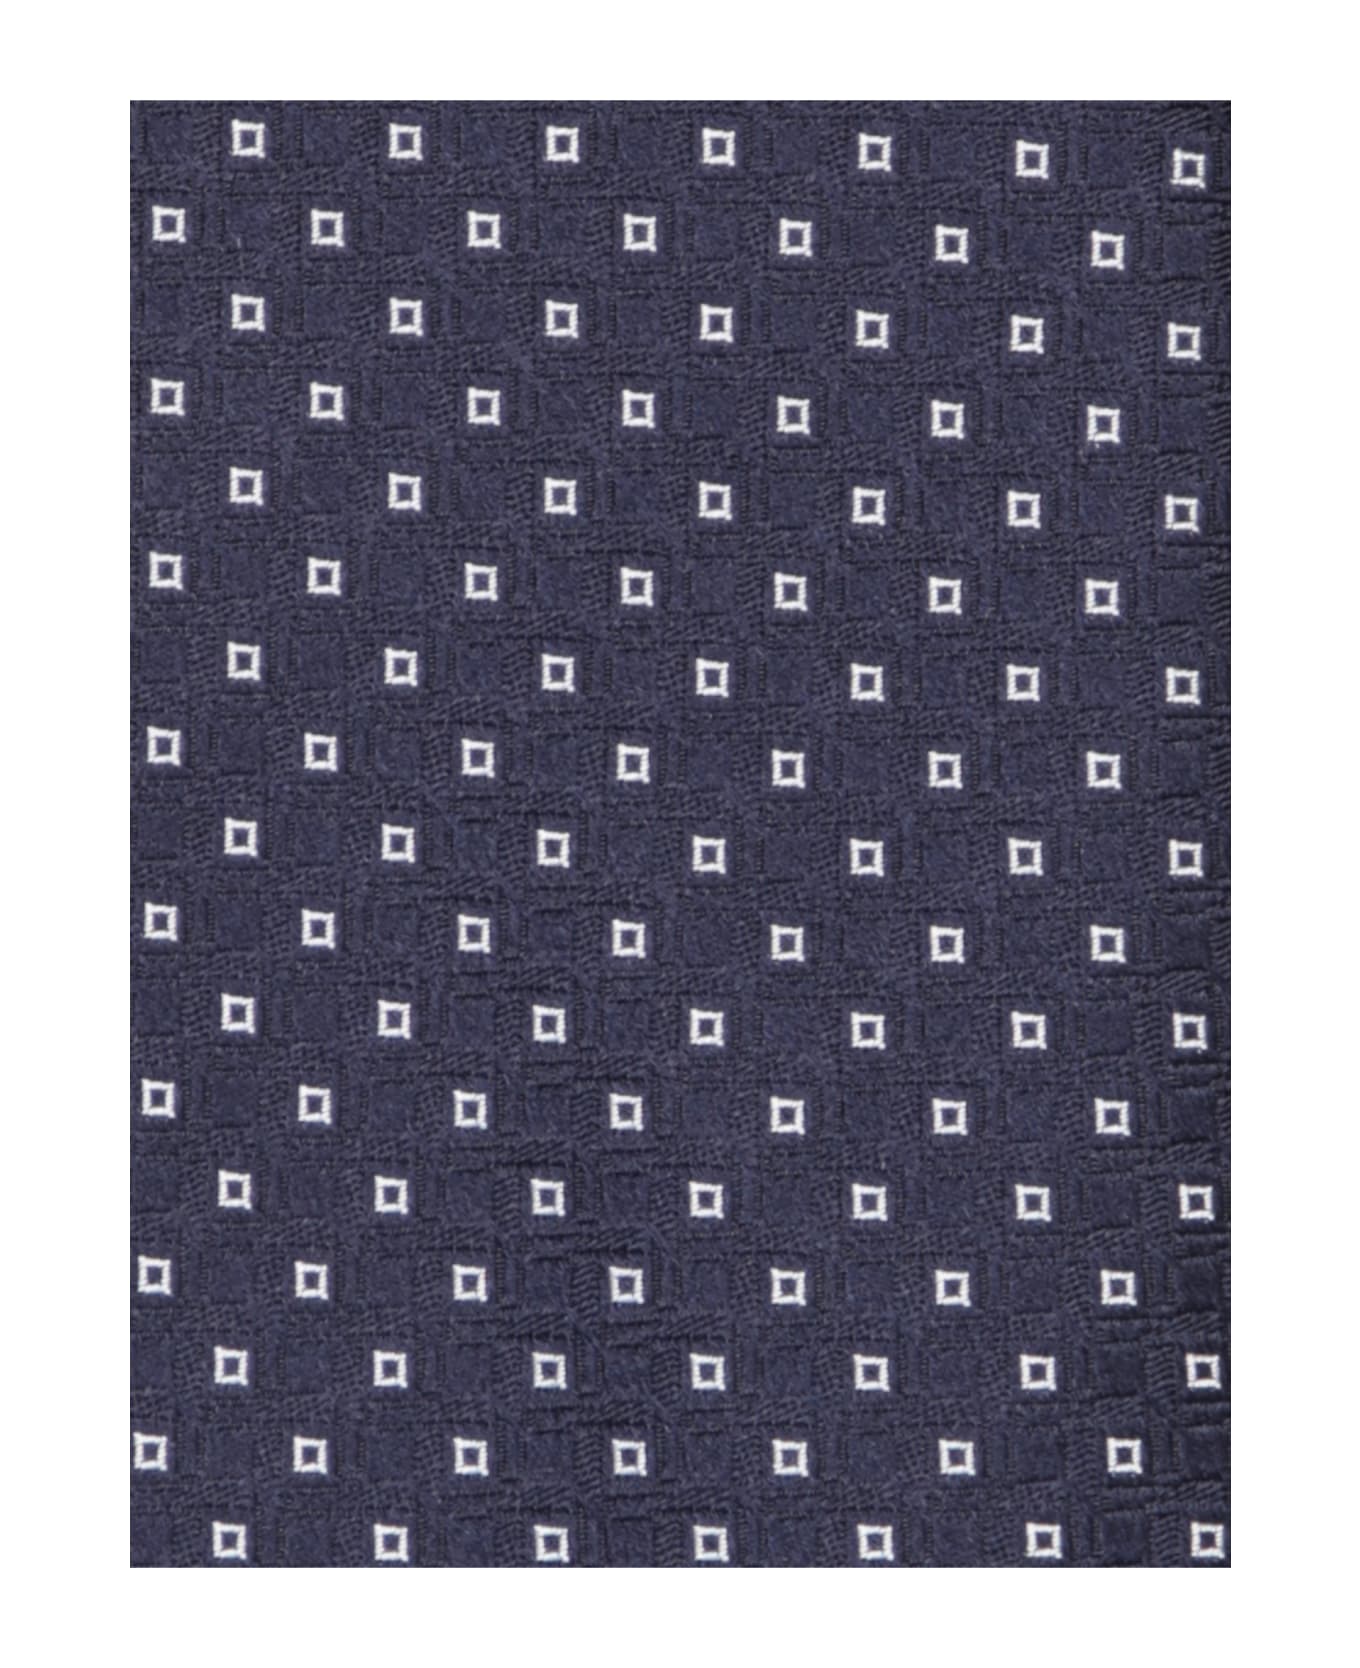 Canali Micropattern Square White/blue Tie - Blue